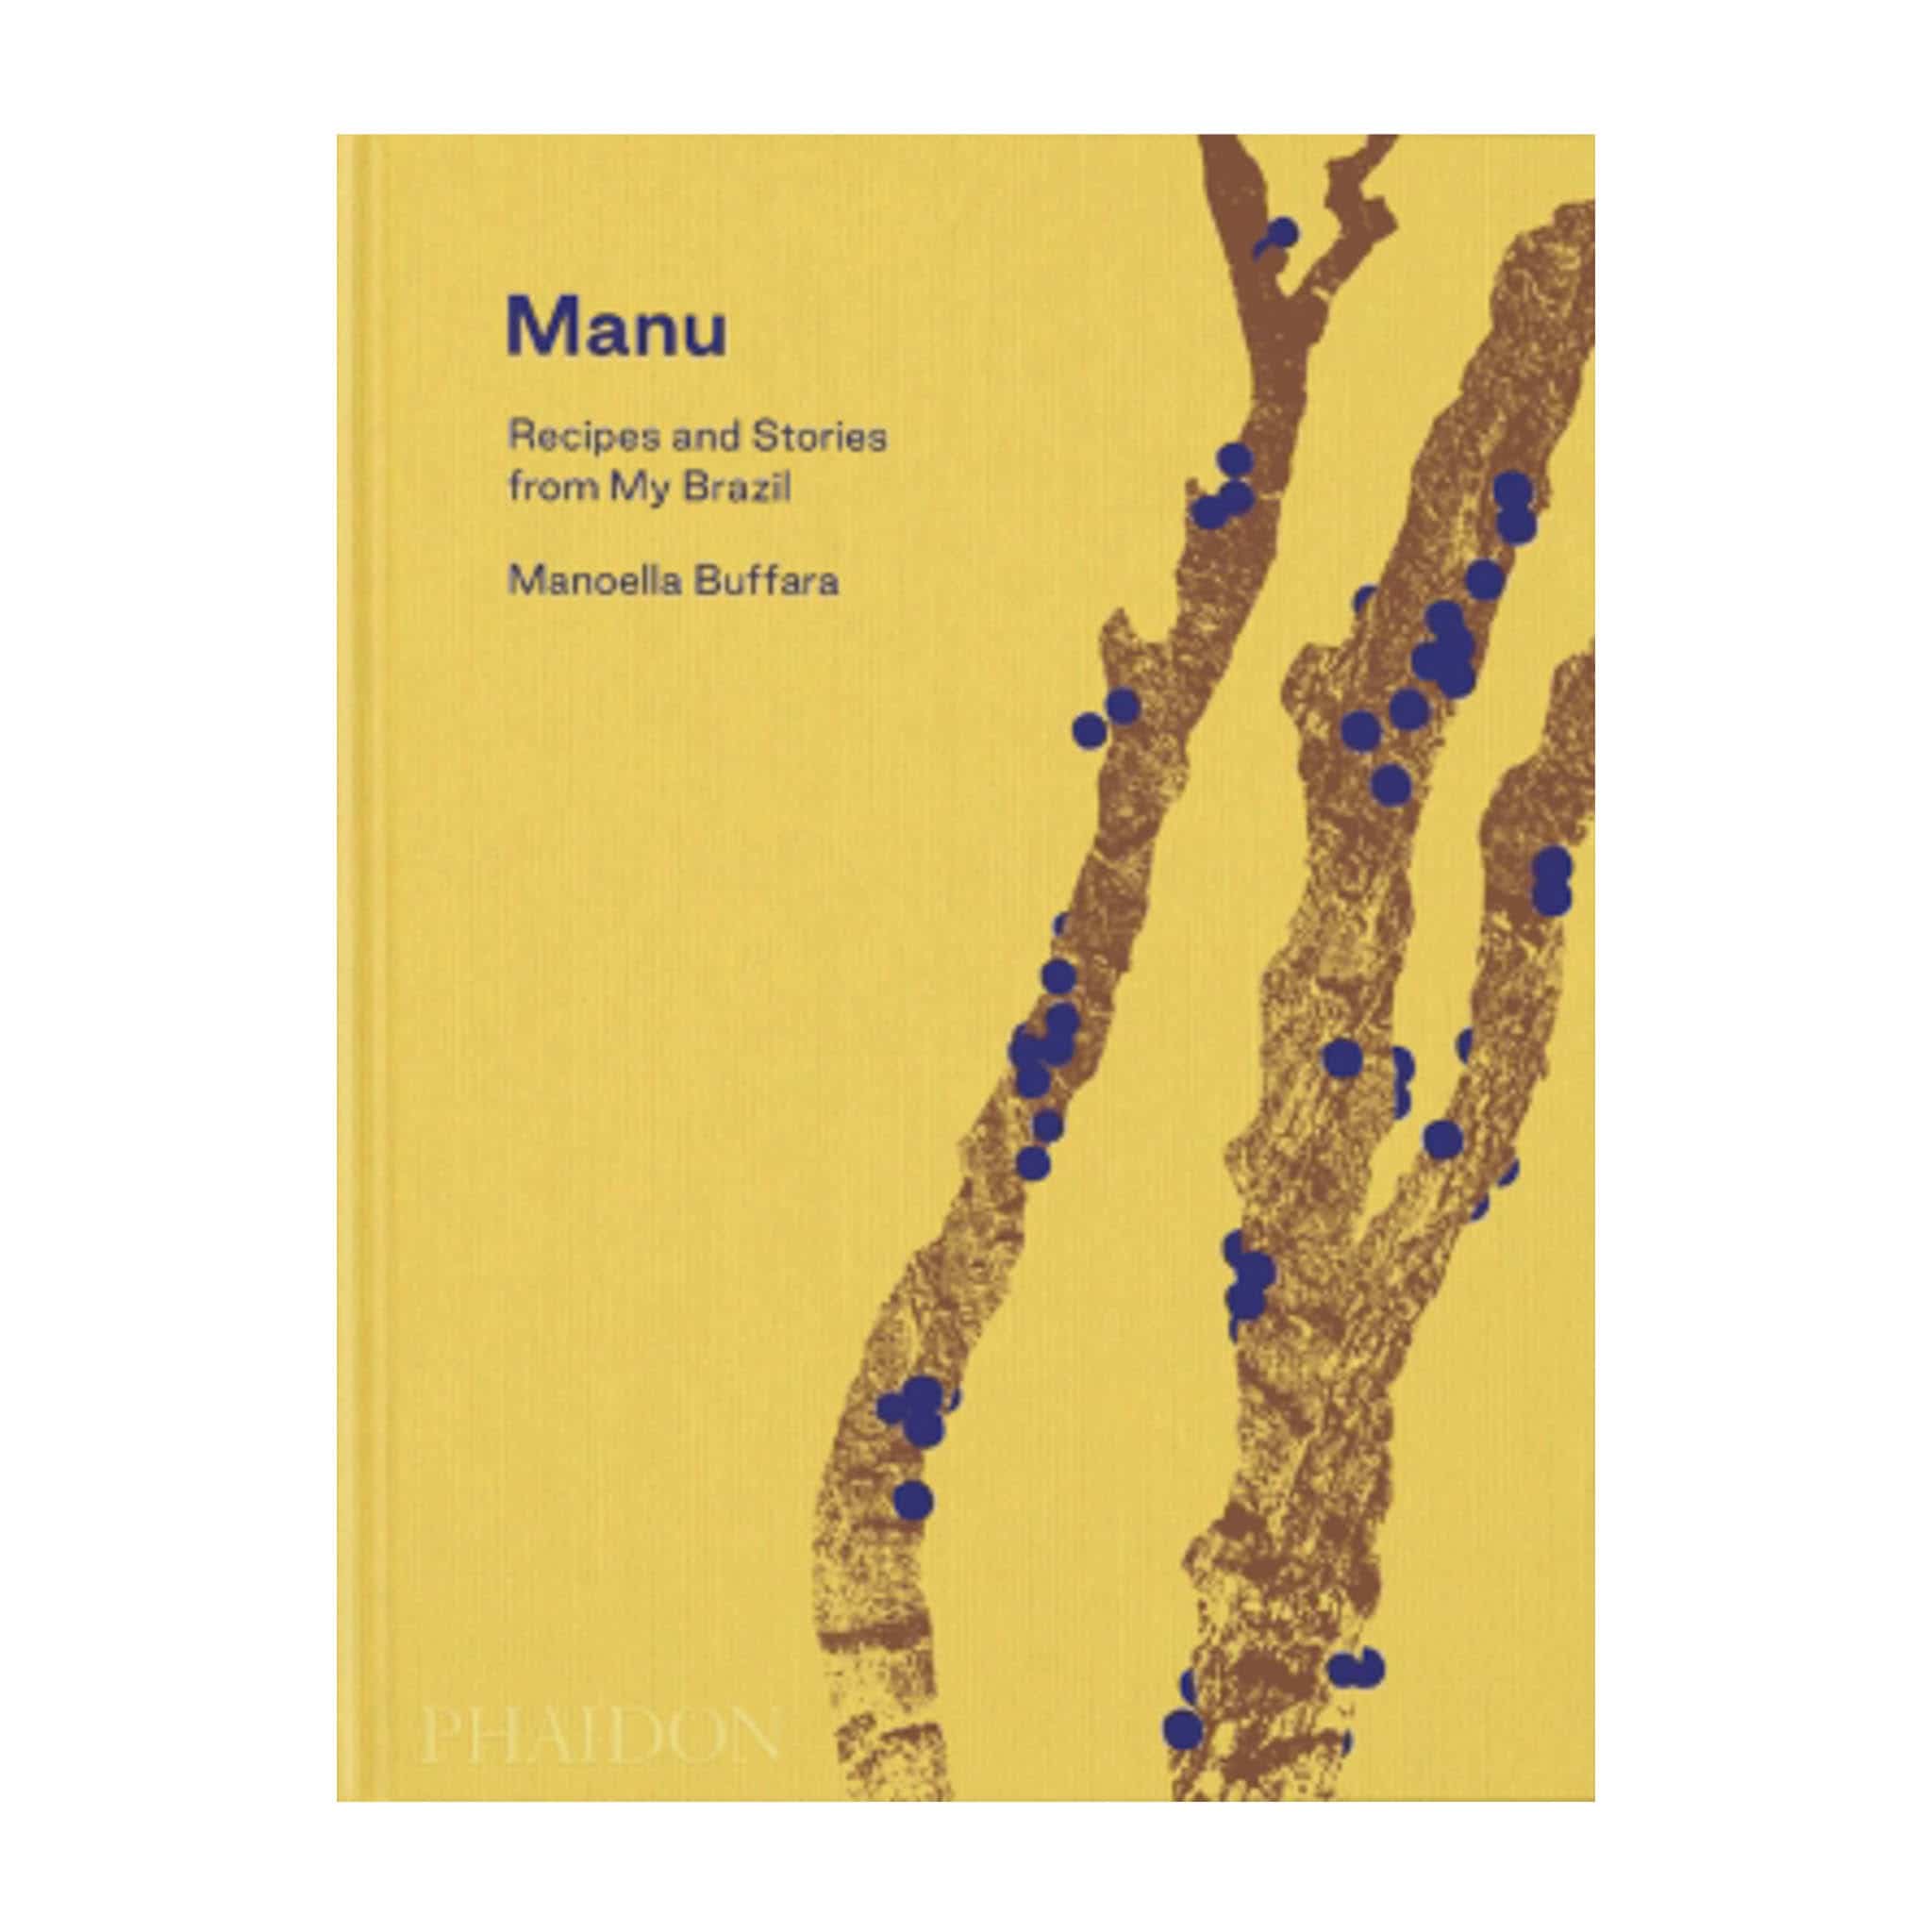 Manu, Recipes and Stories from My Brazil, by Manoella Buffara